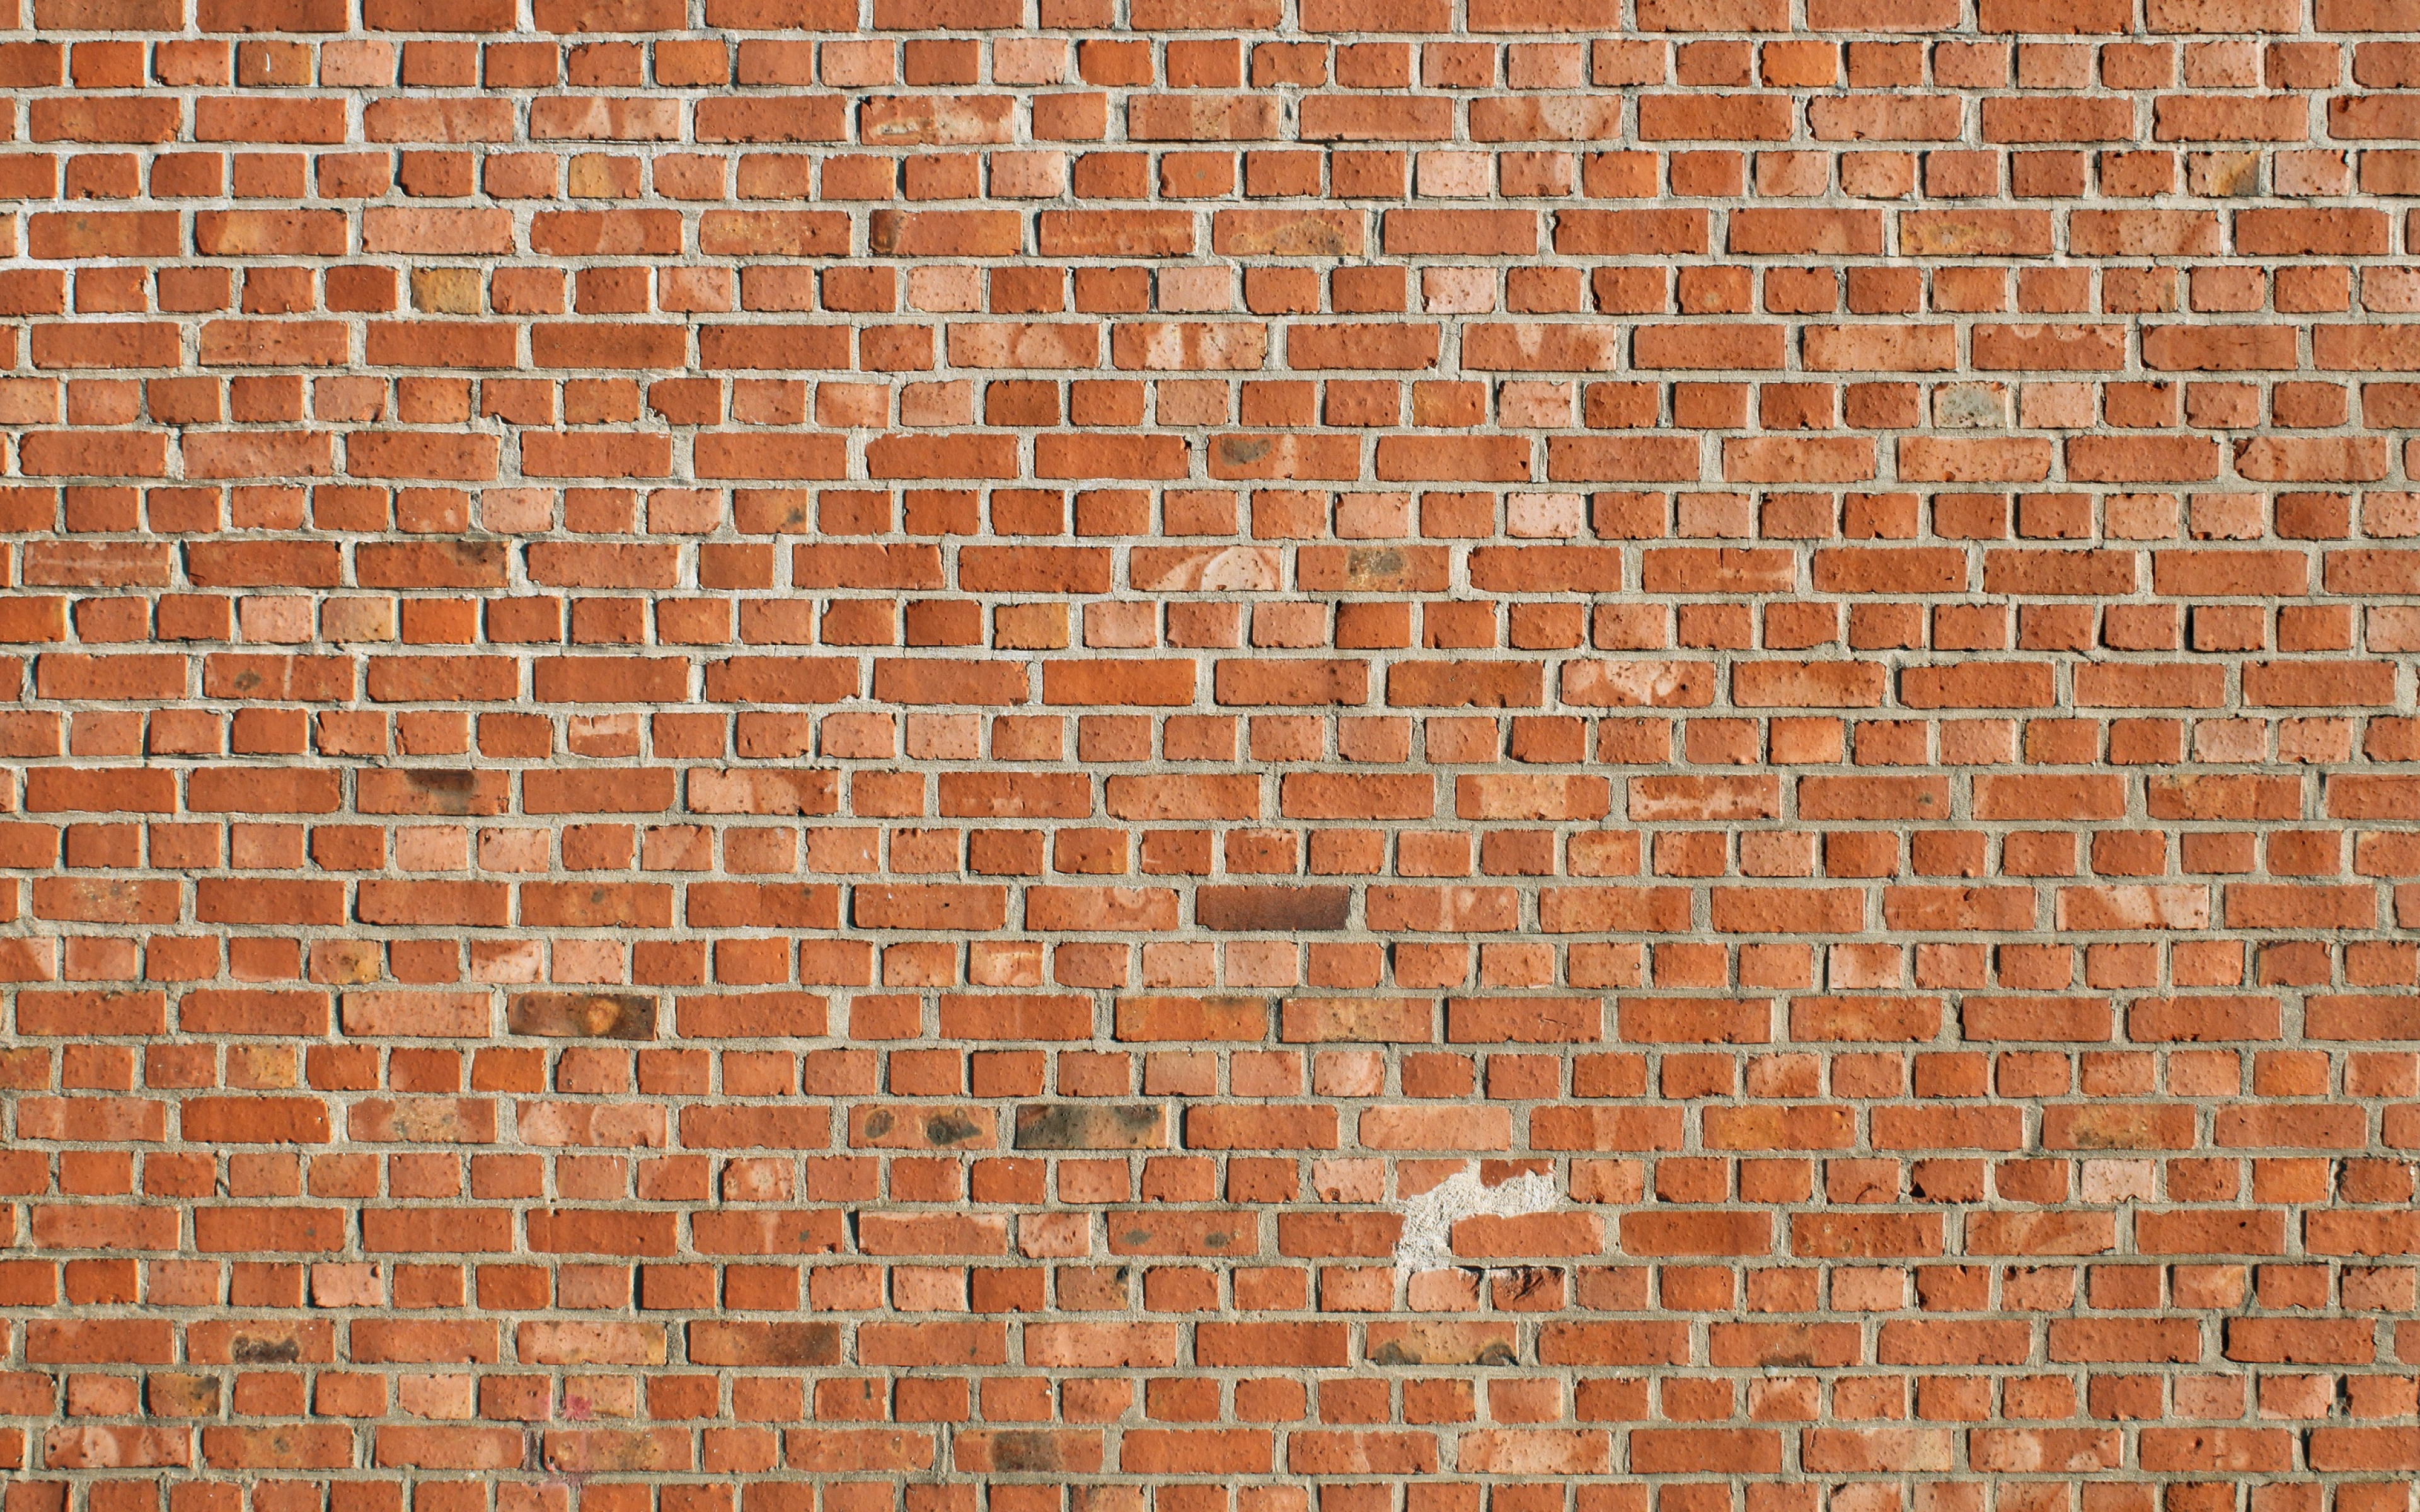 Brick backgrounds